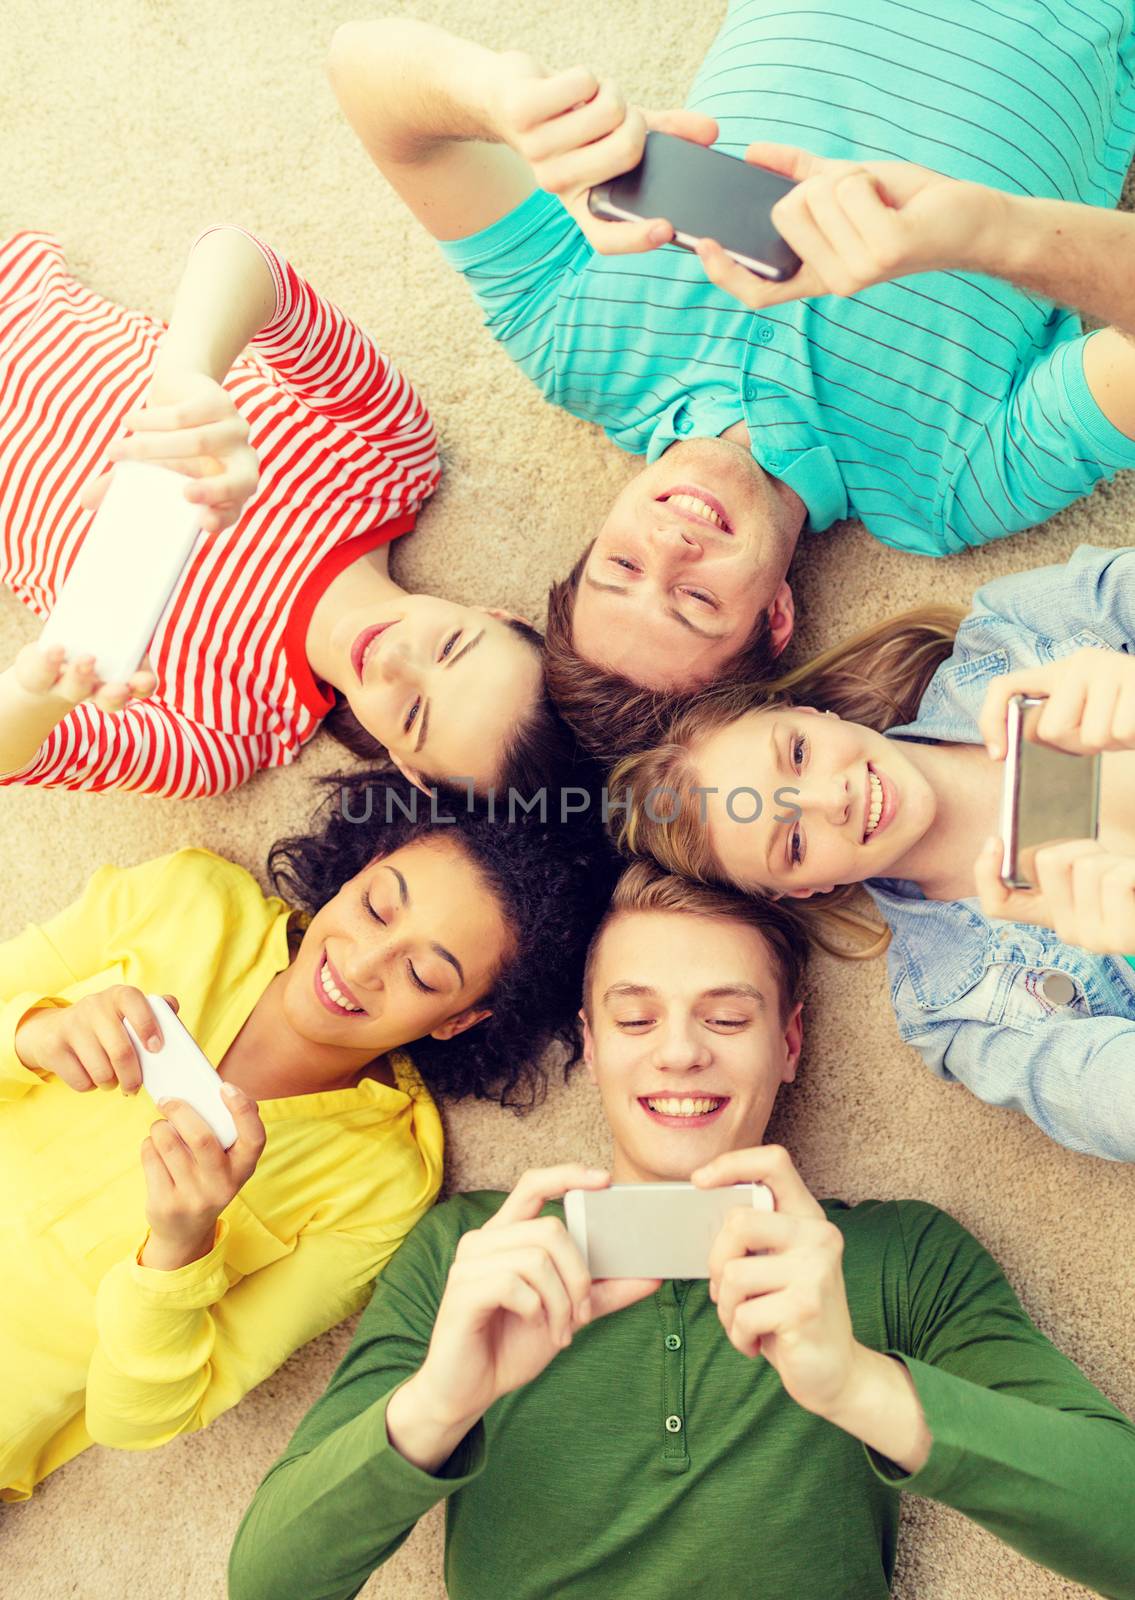 group of smiling people lying down on floor by dolgachov